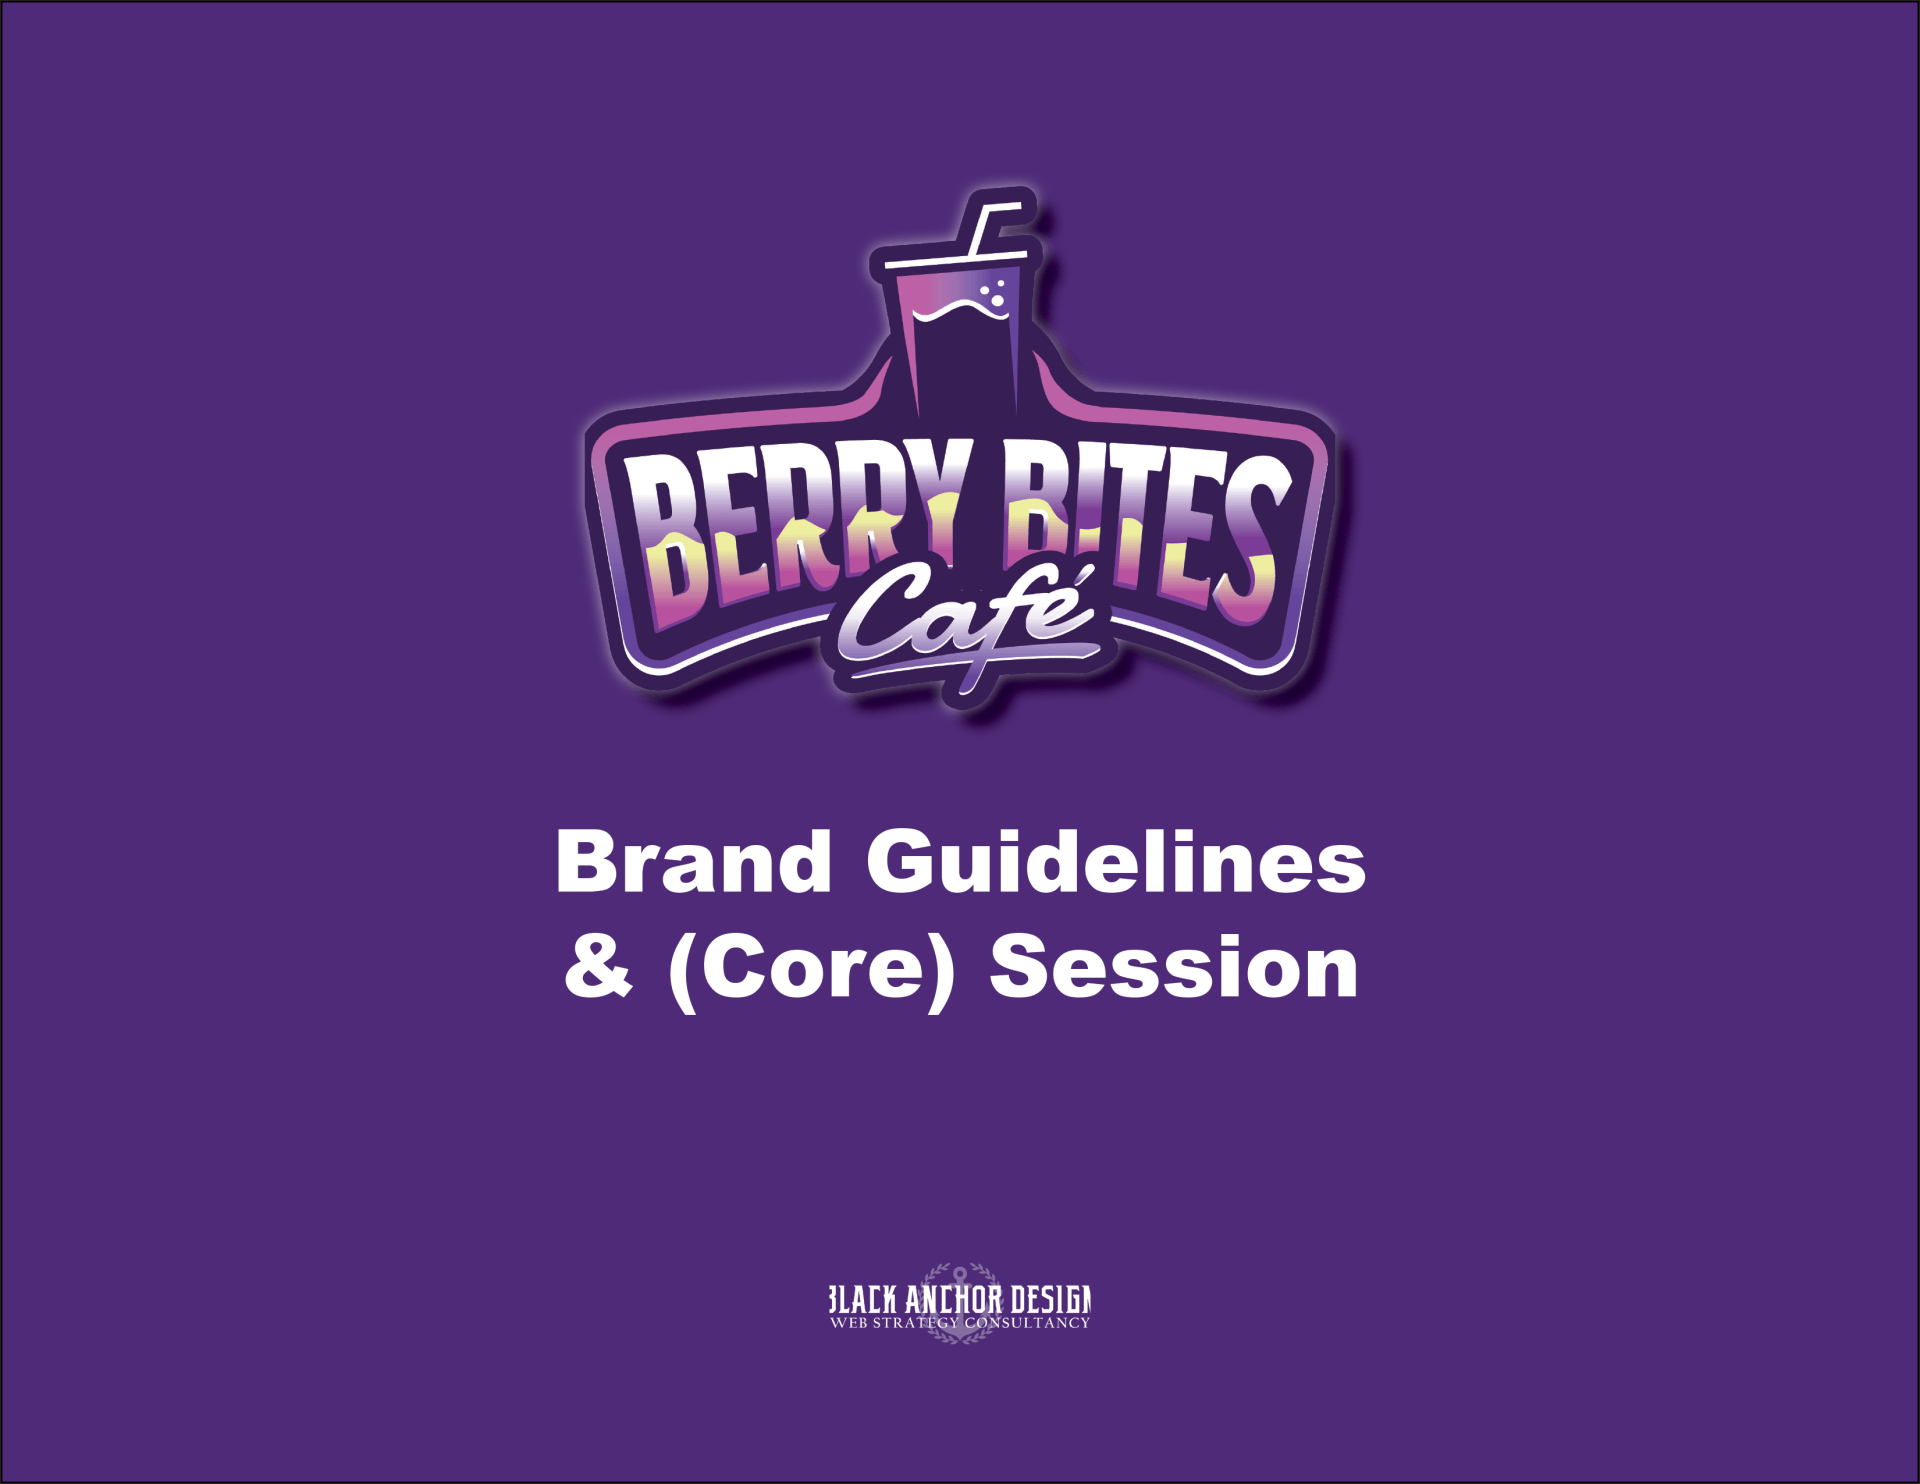 Berry Bites Cafe Brand Guide